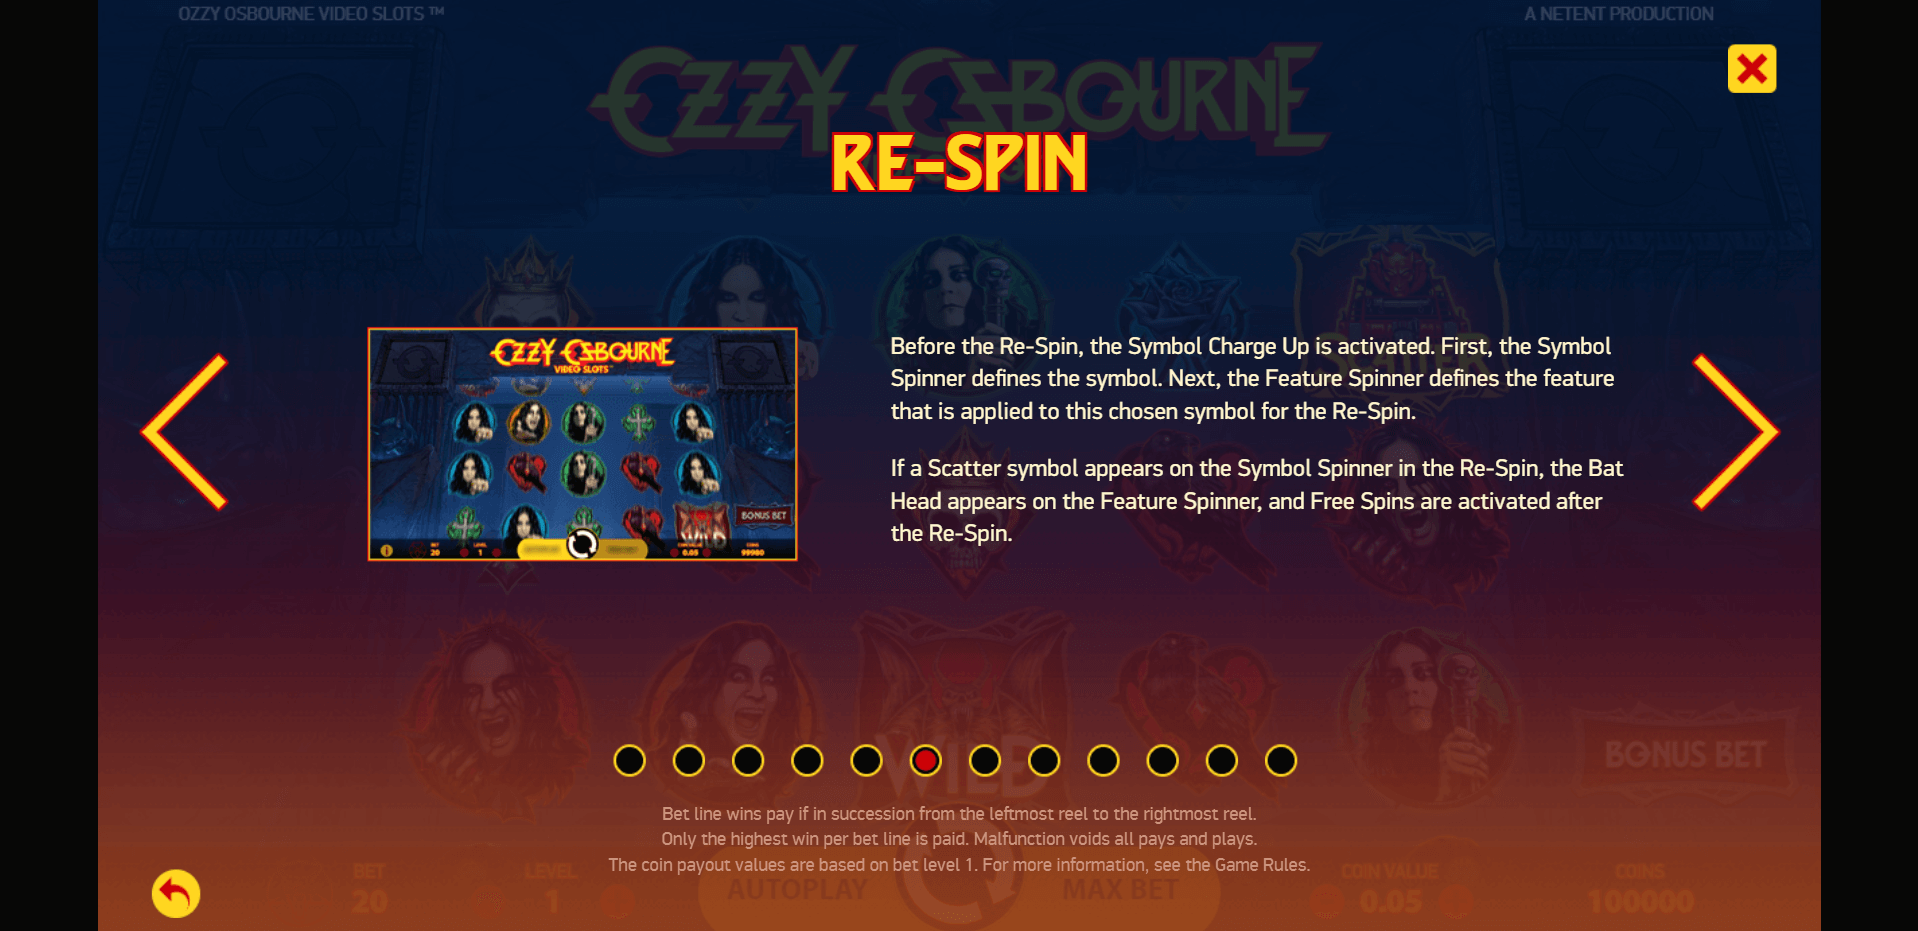 ozzy osbourne slot machine detail image 5